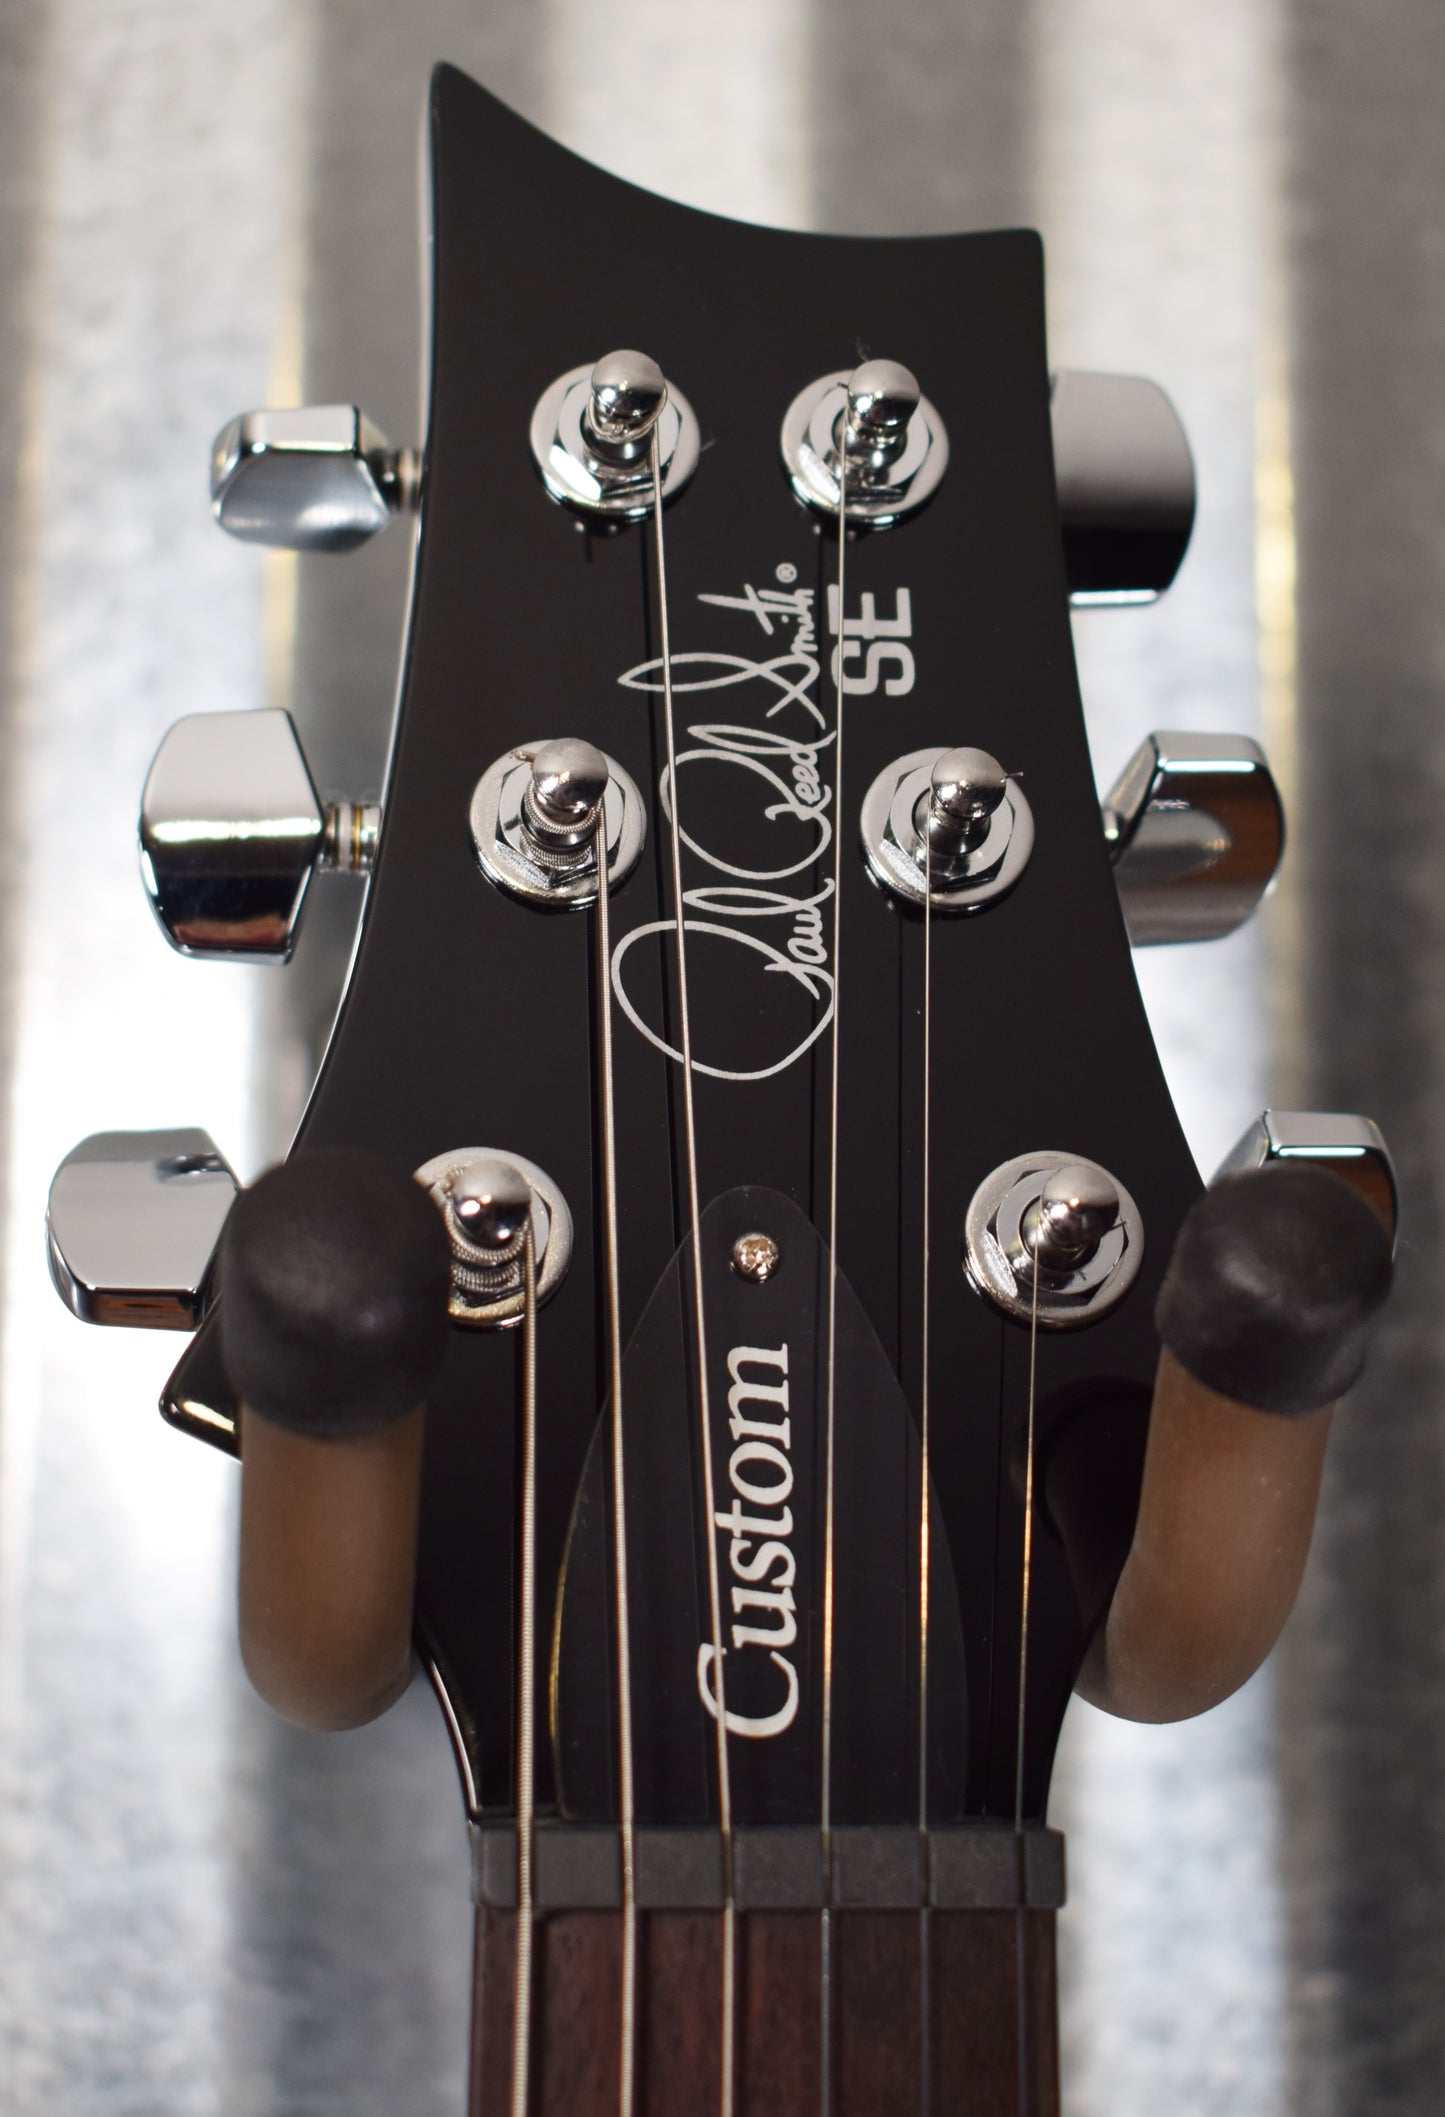 PRS Paul Reed Smith SE Custom 22 Semi-Hollow Gray Black Guitar & Bag #2725